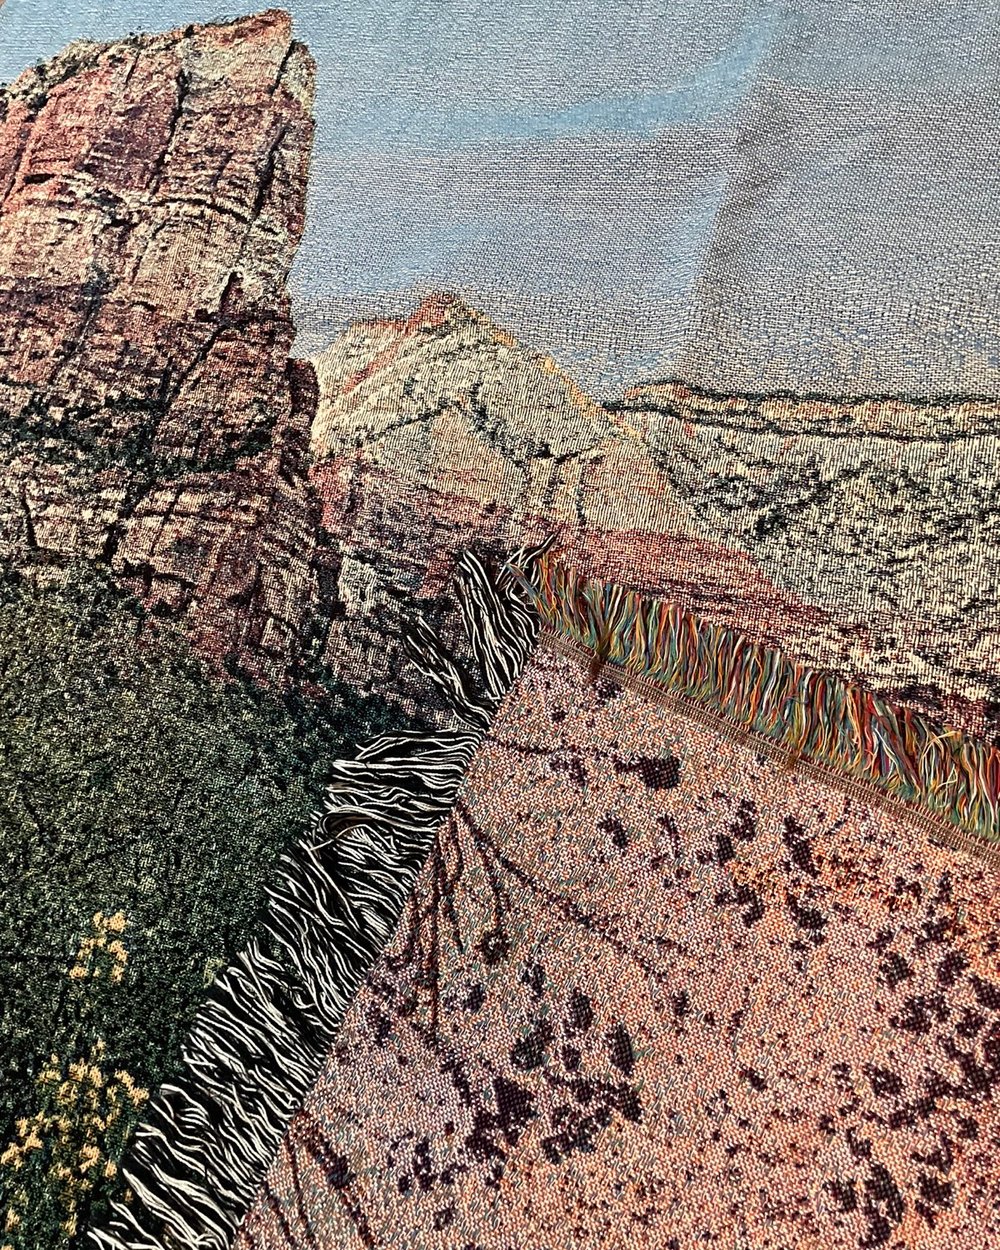 Archive Blanket #15 - Zion National Park